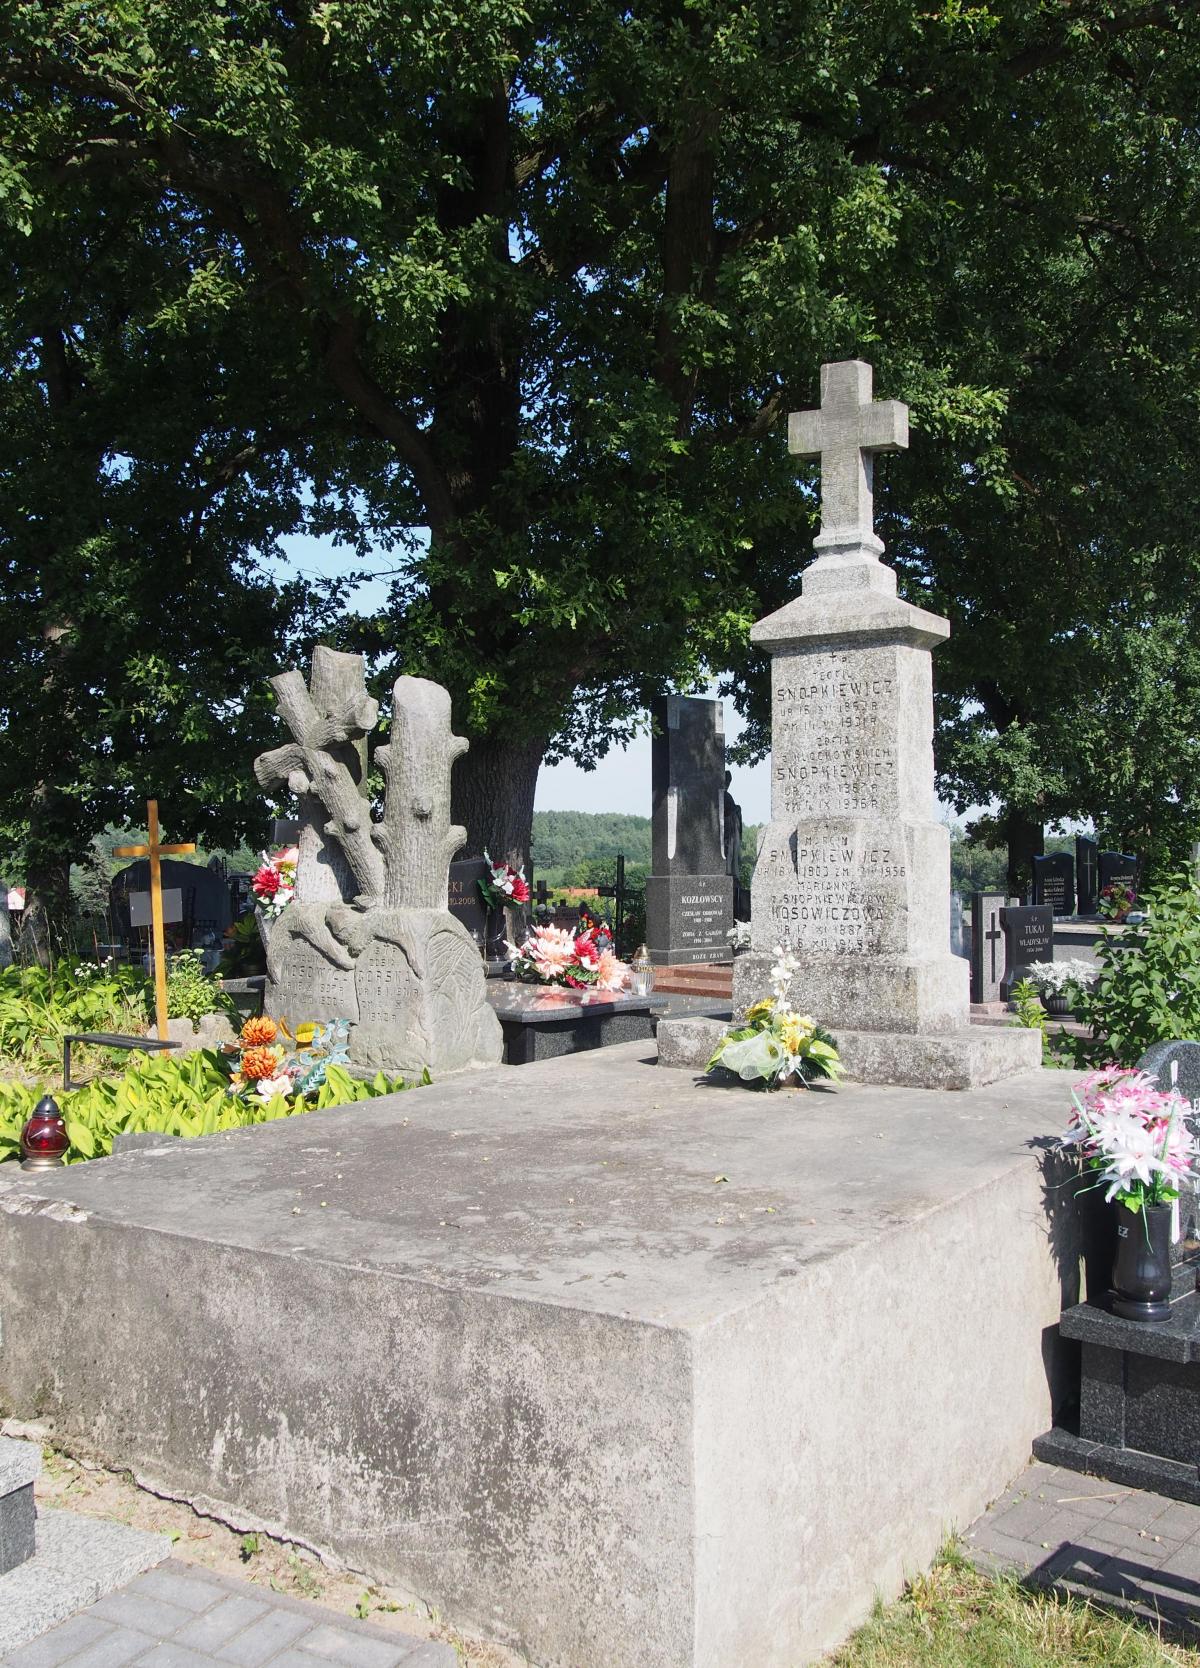 Wikipedia, Parish cemetery in Bogoria, powiat staszowski, Self-published work